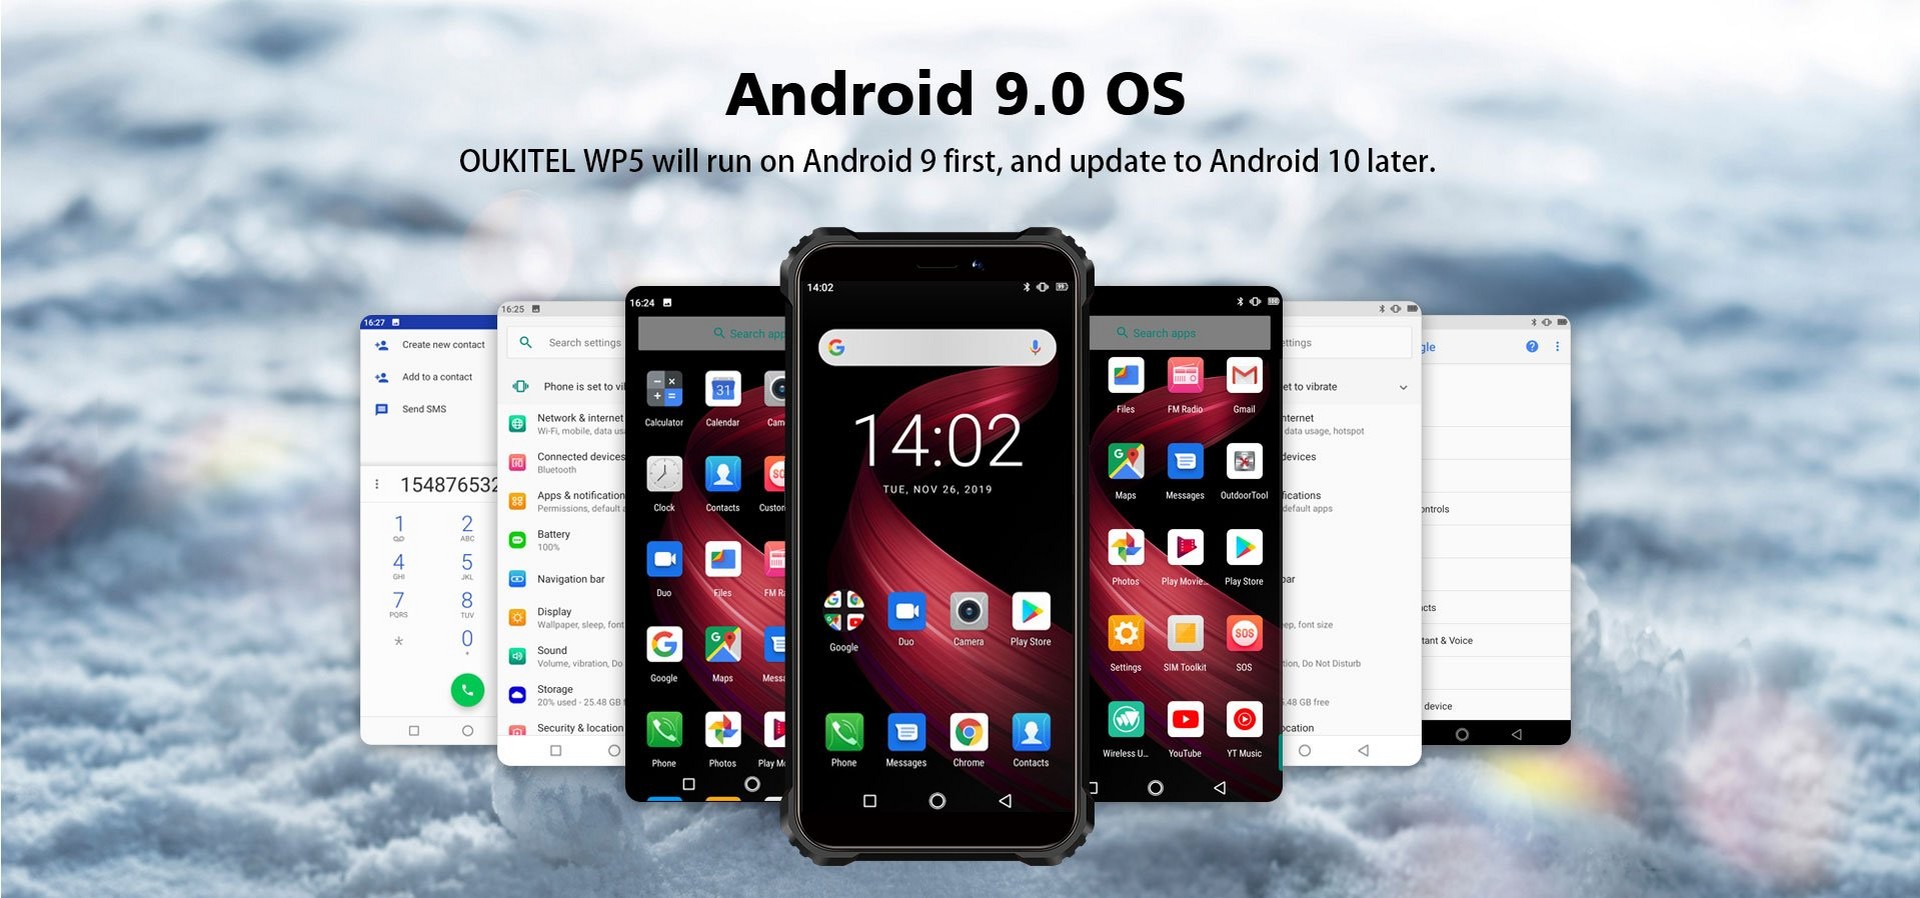 Oukitel WP5 - Android 9